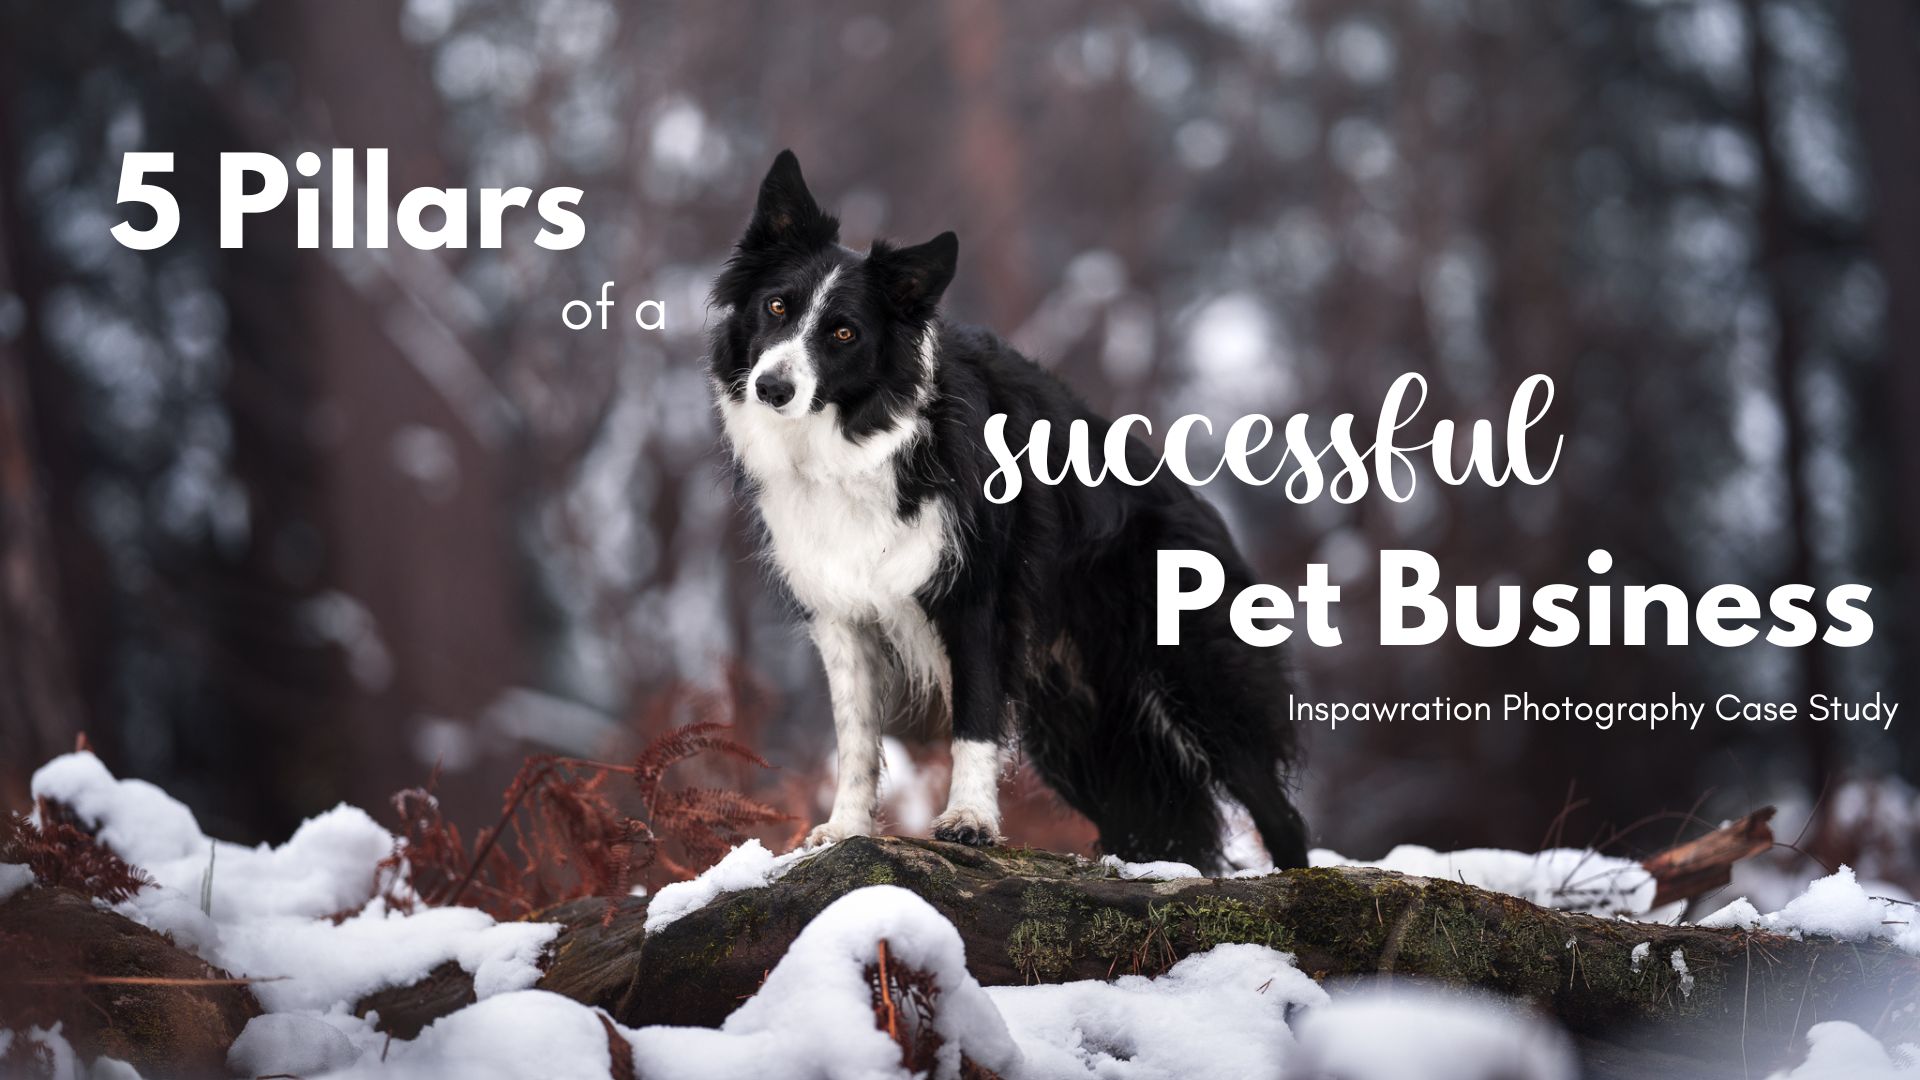 5 Pillars of a Successful Pet Business: Inspawration Case Study